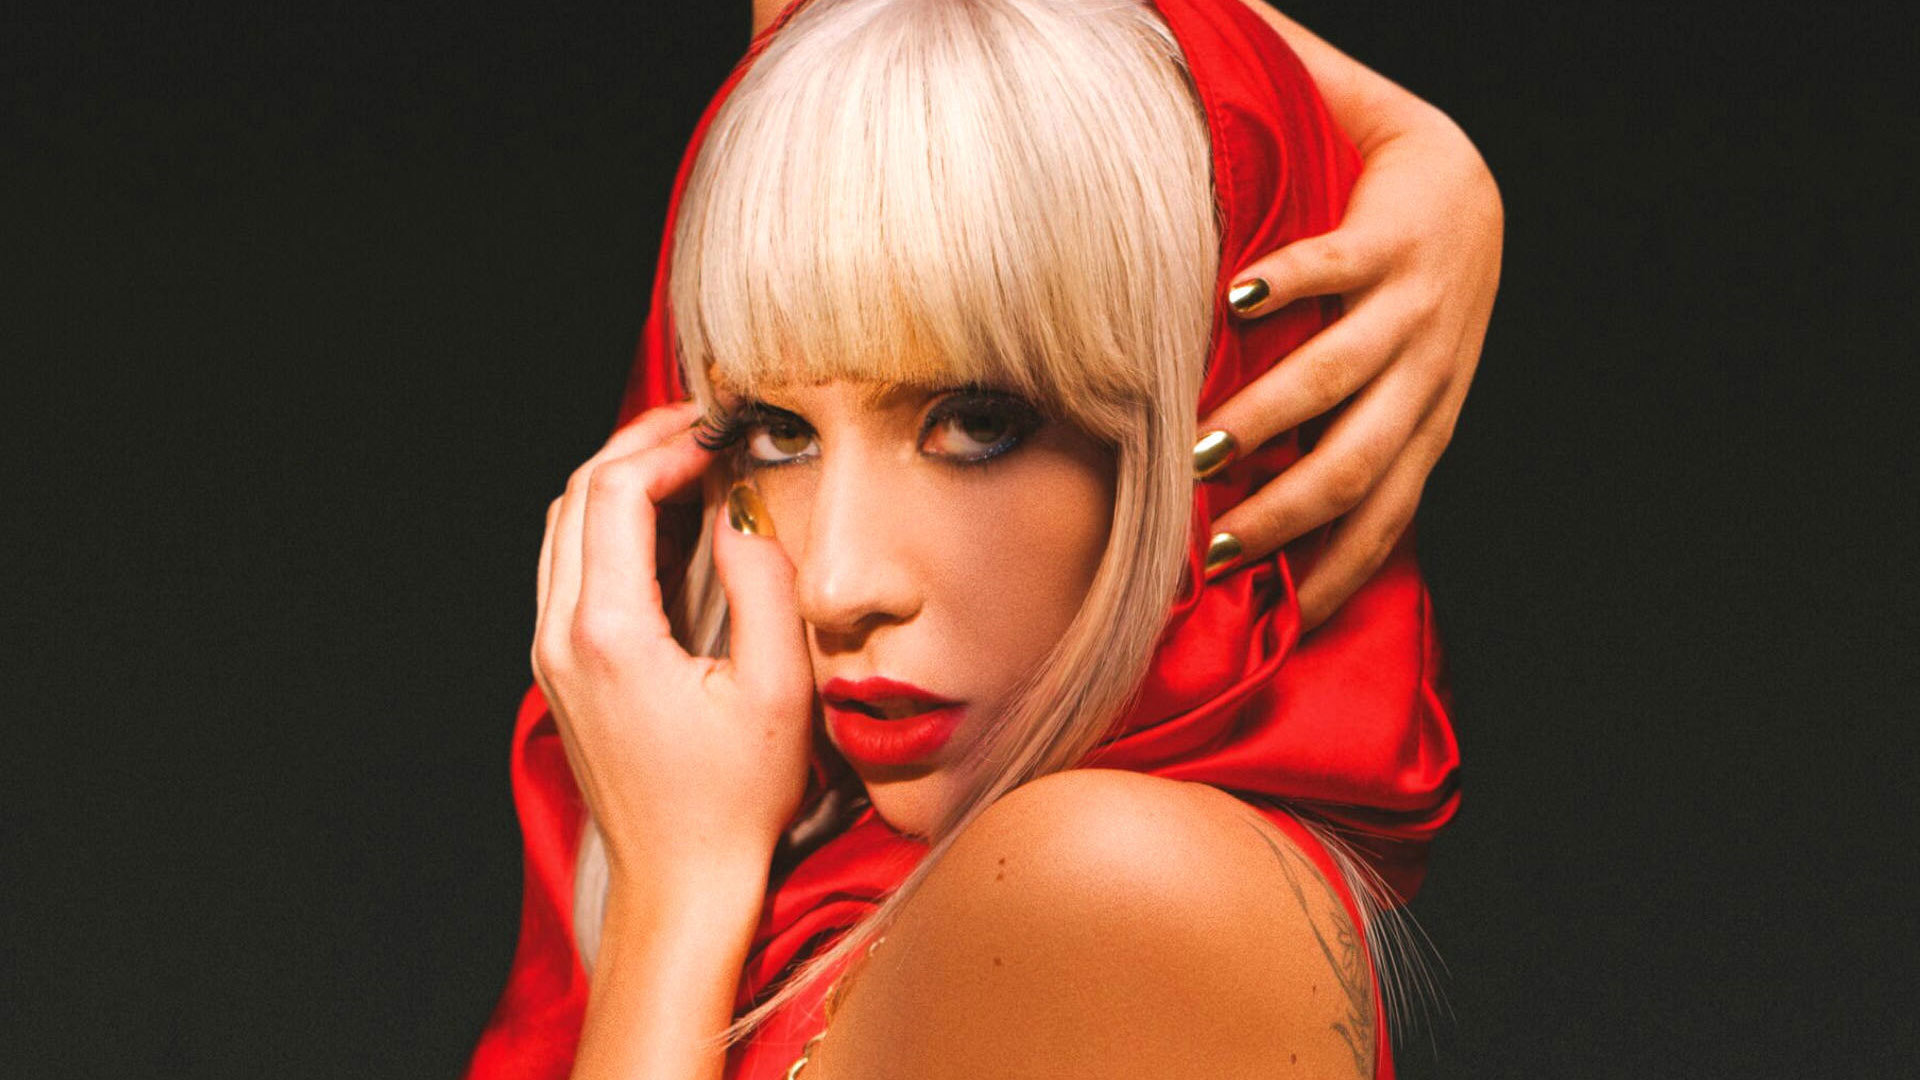 Best Lady Gaga wallpaper ID:291434 for High Resolution 1080p desktop